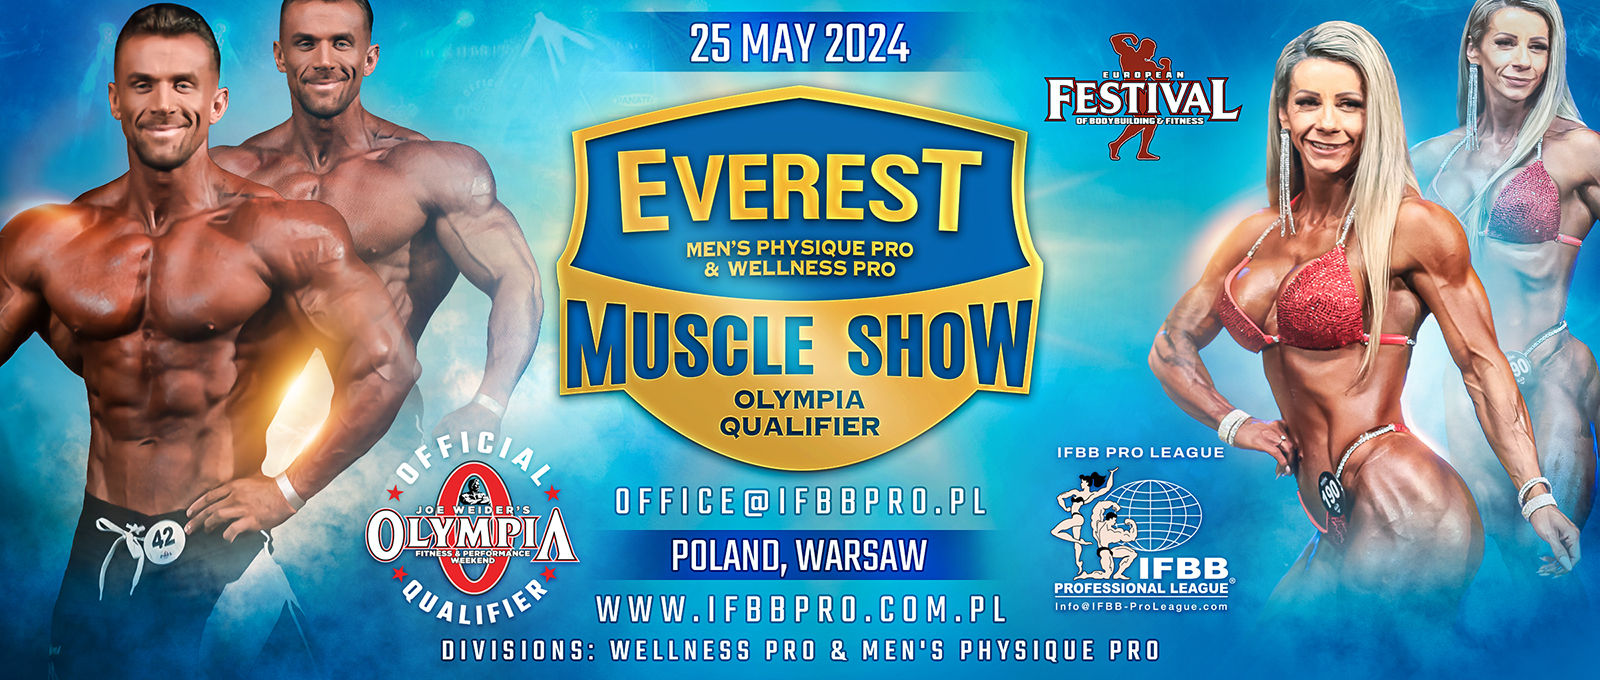 2024 Poland Pro contest banner 052524